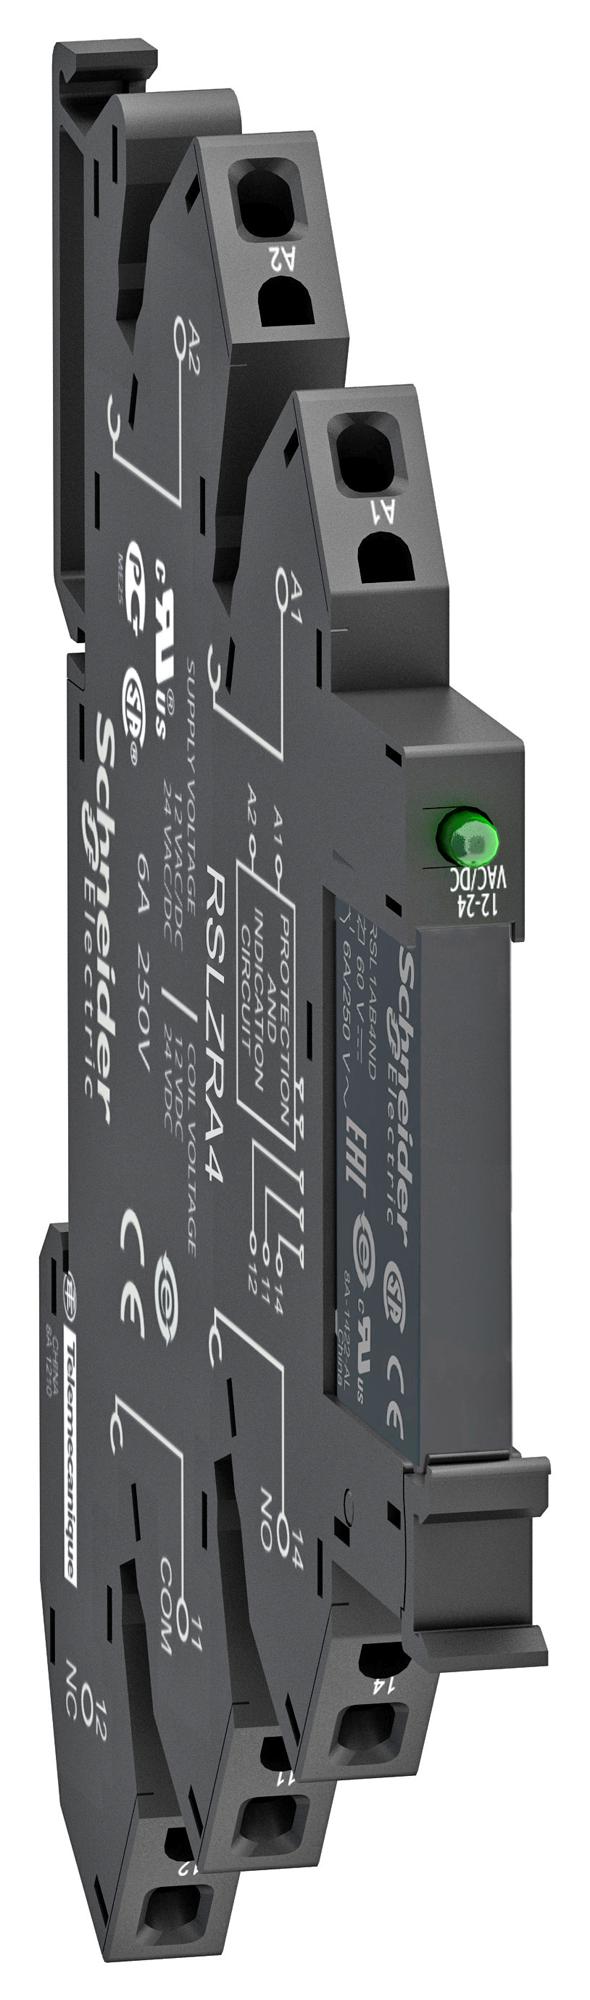 RSL1PRFU POWER RELAY, SPDT, 6A, 400VAC SCHNEIDER ELECTRIC